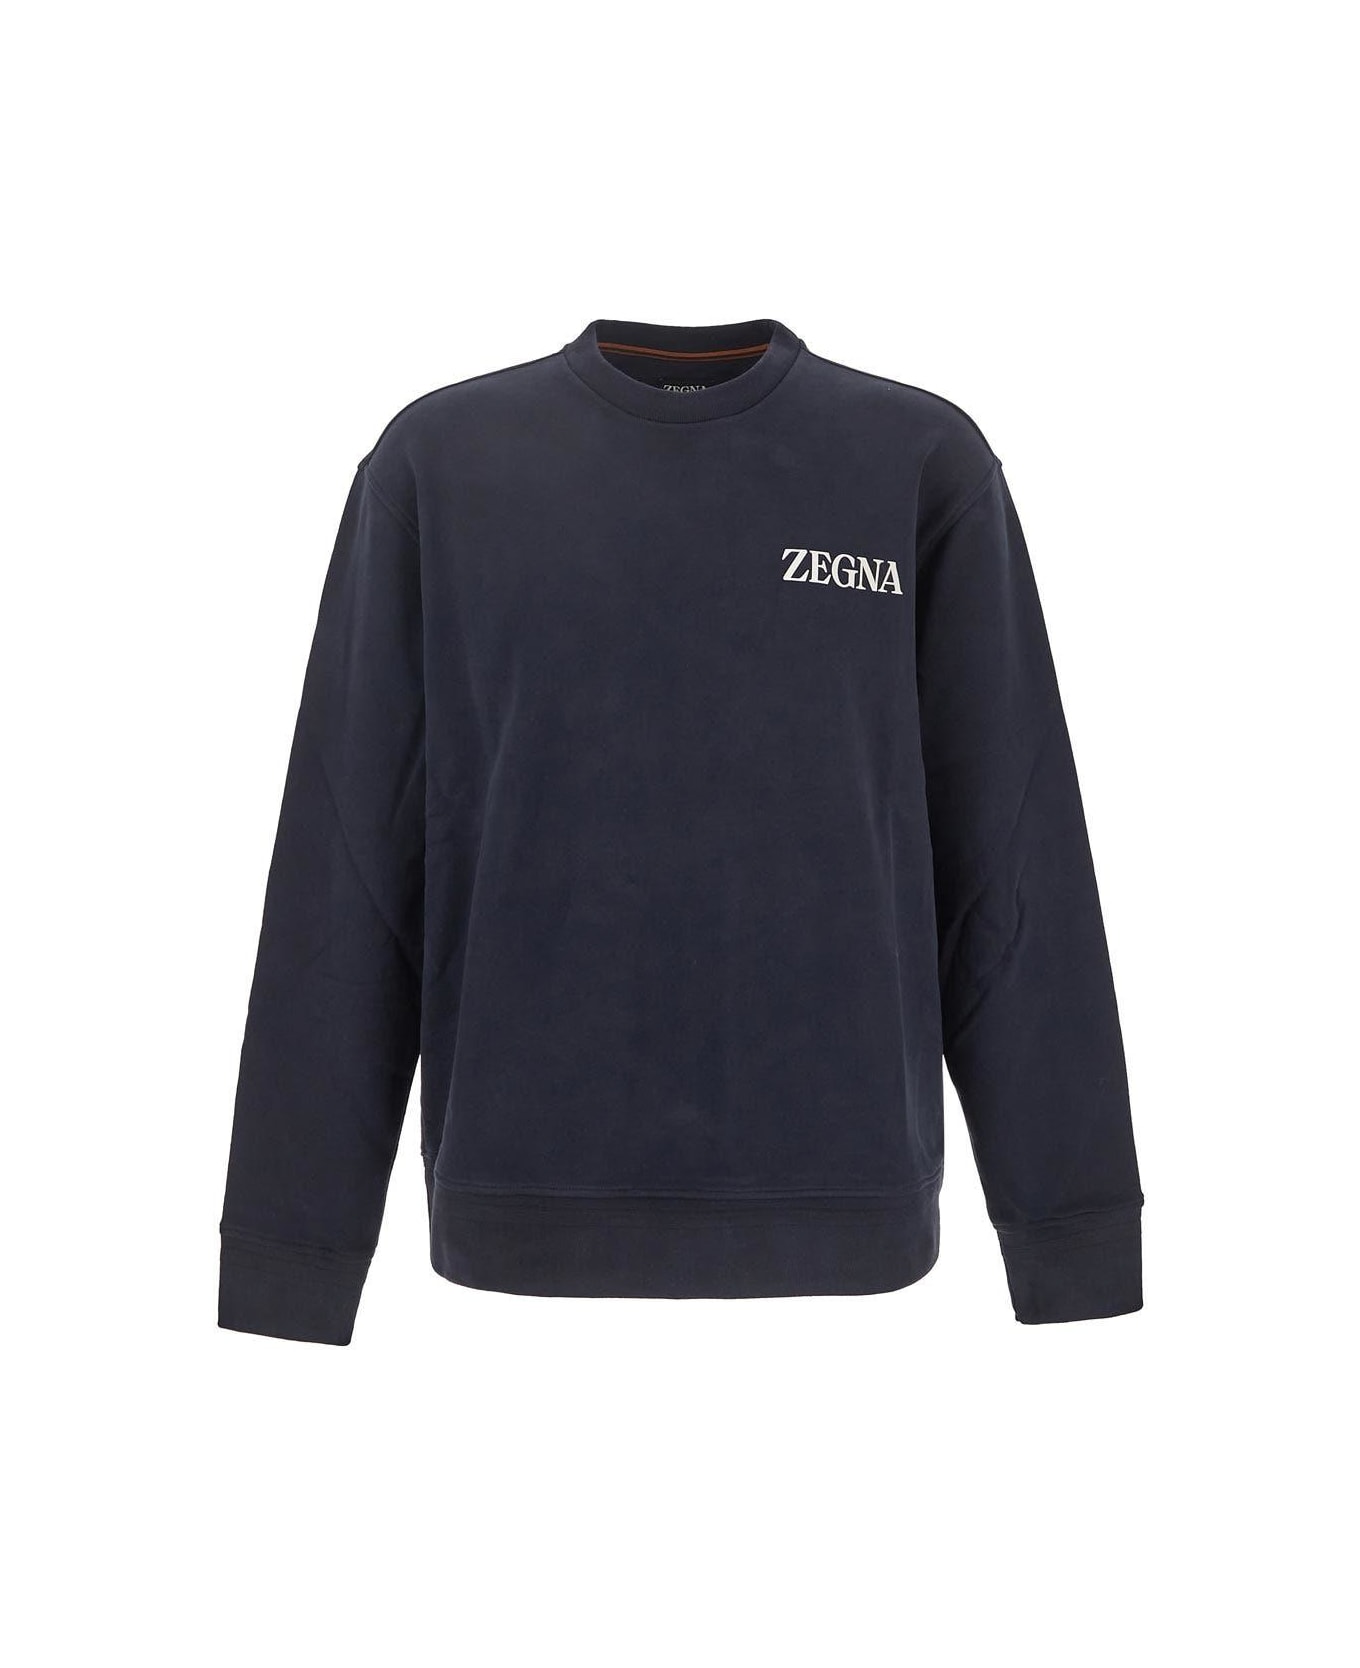 Zegna Navy Blue Sweatshirt - Blue navy フリース